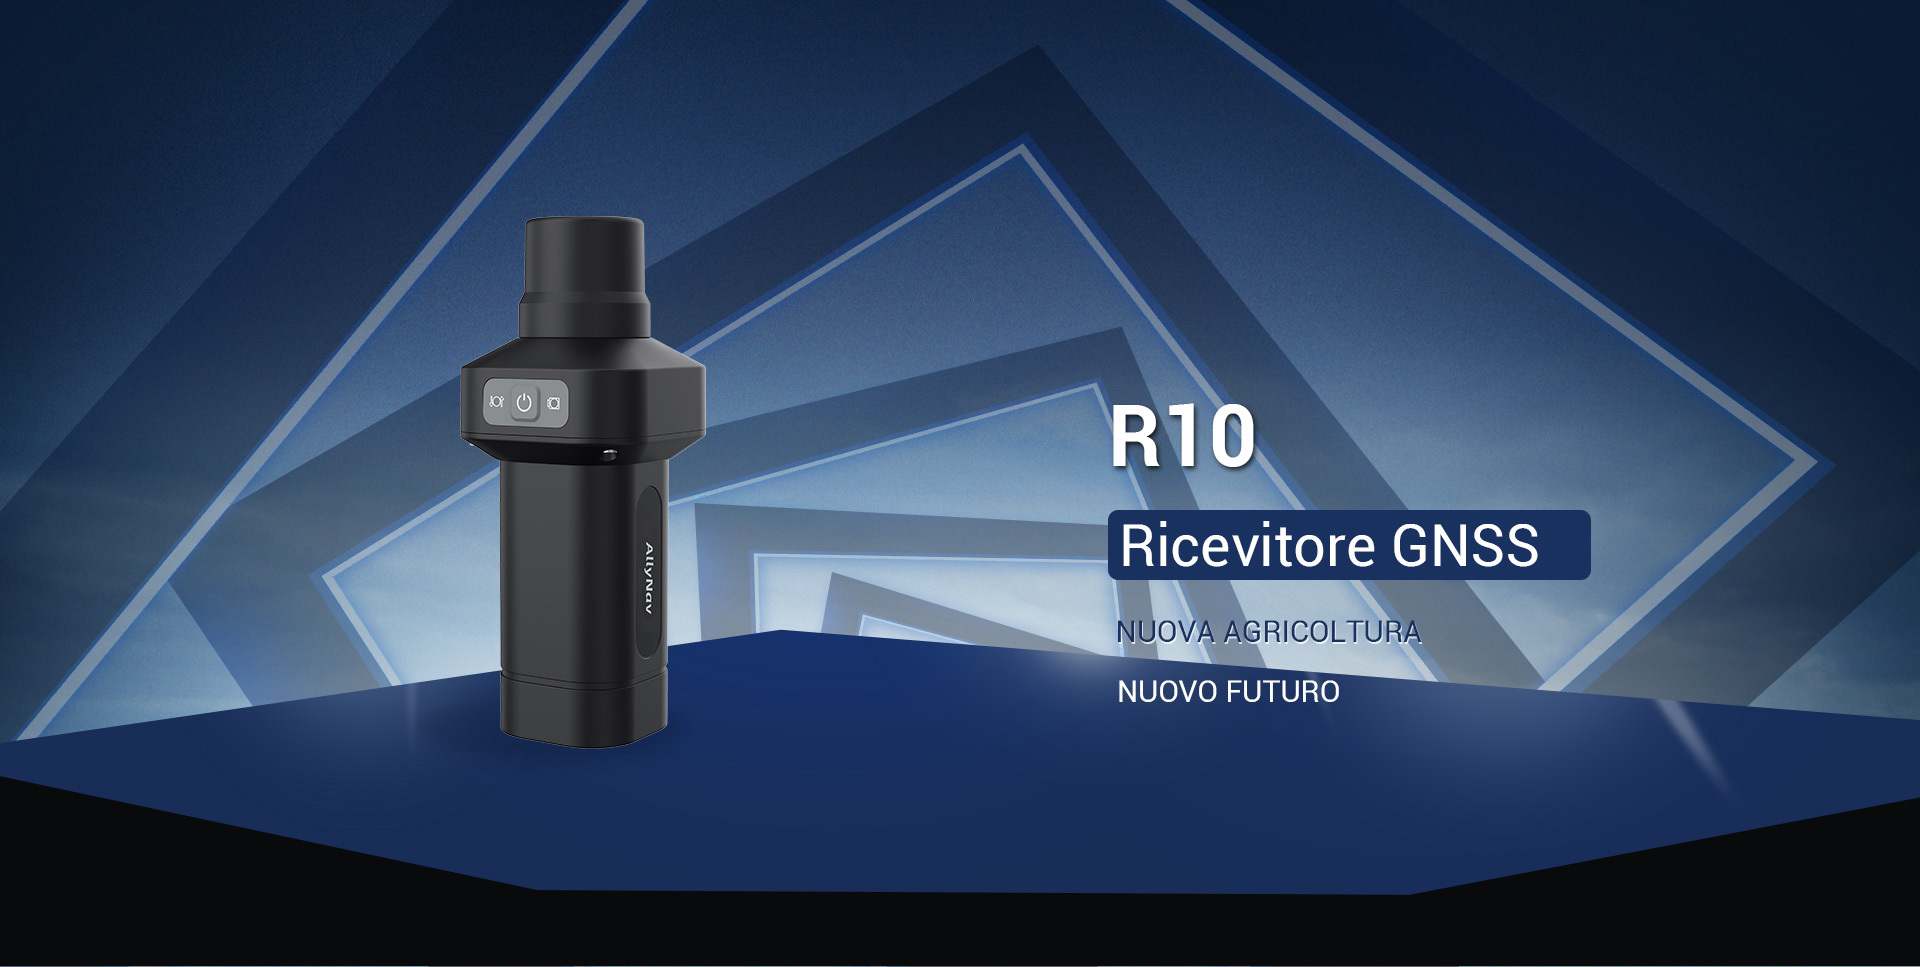 GNSS ricevitore R10